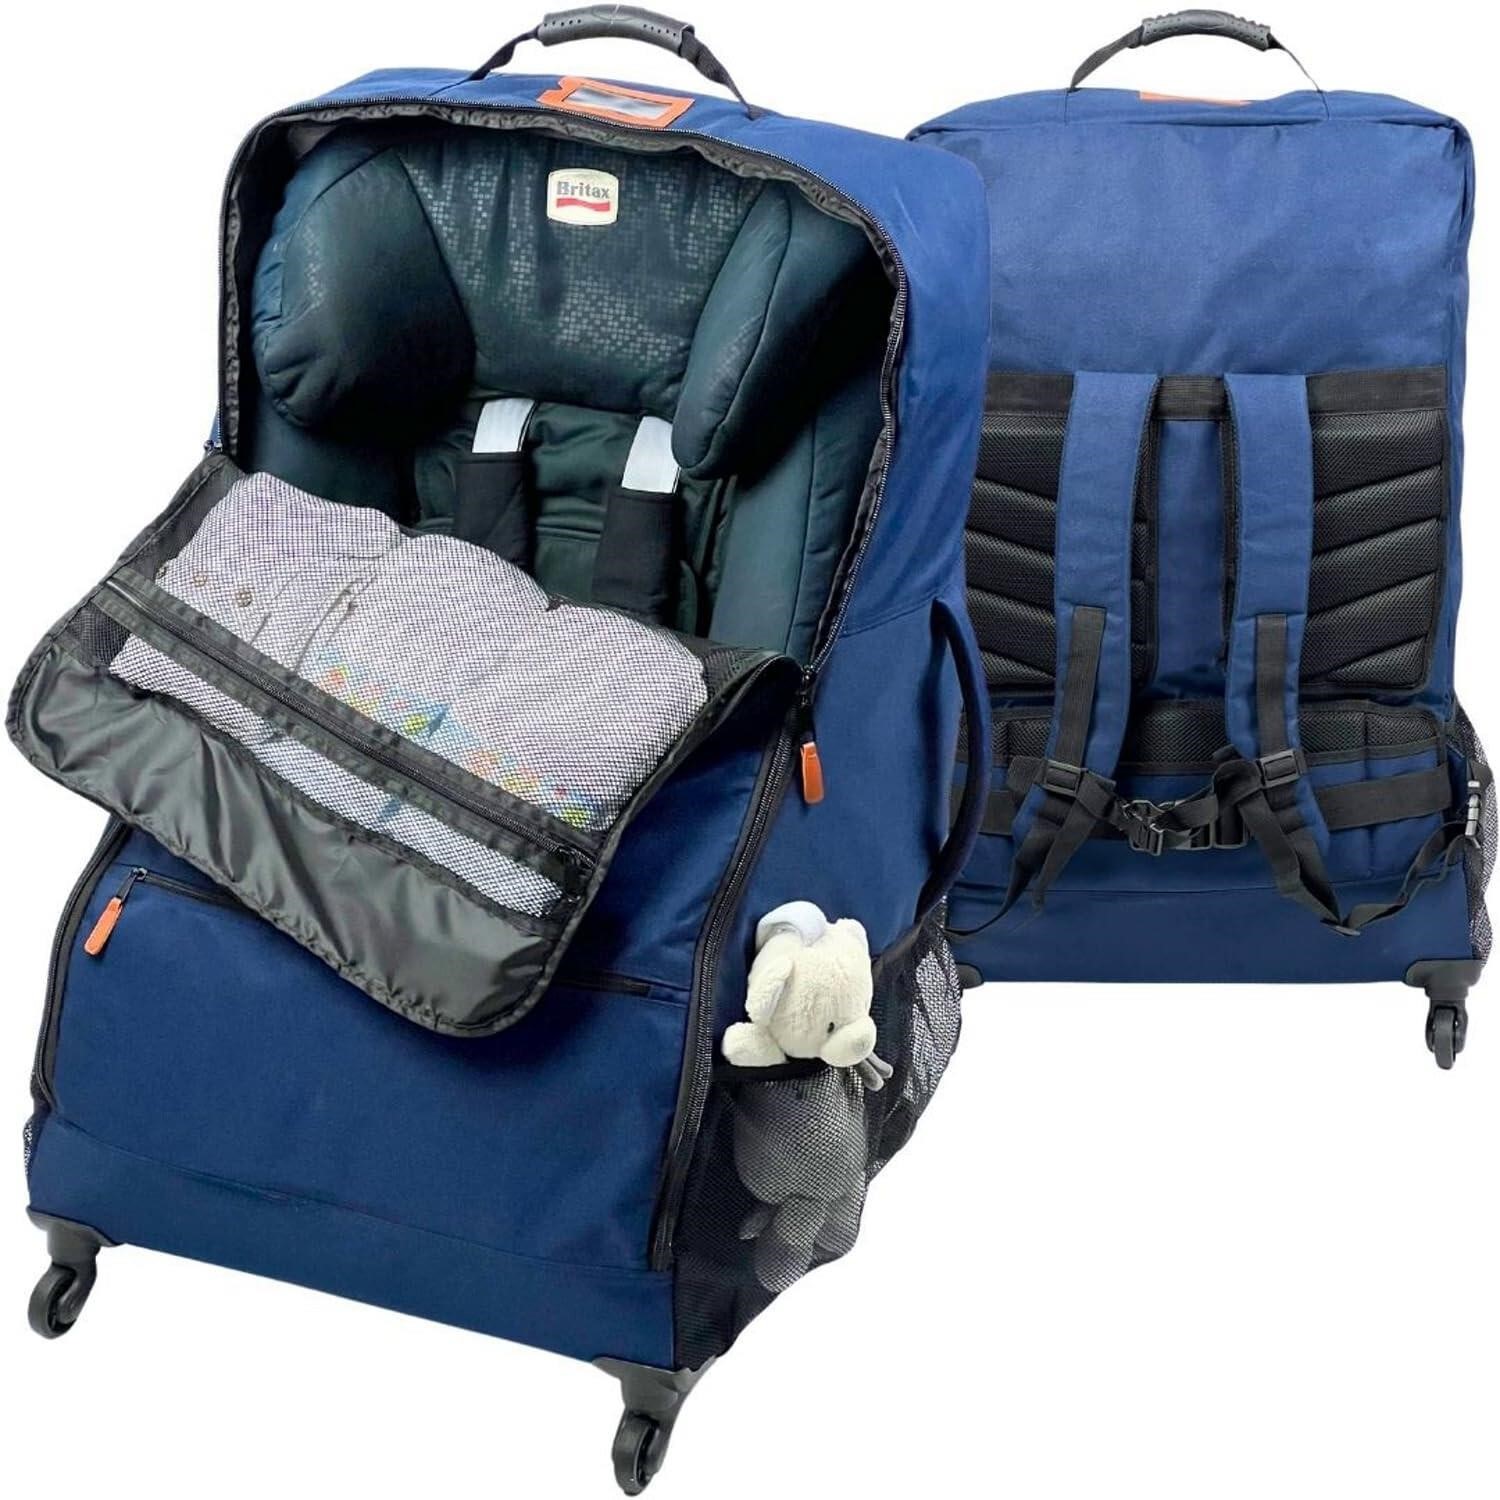 MUMINOON Car seat Travel Bag with Wheels and Backp